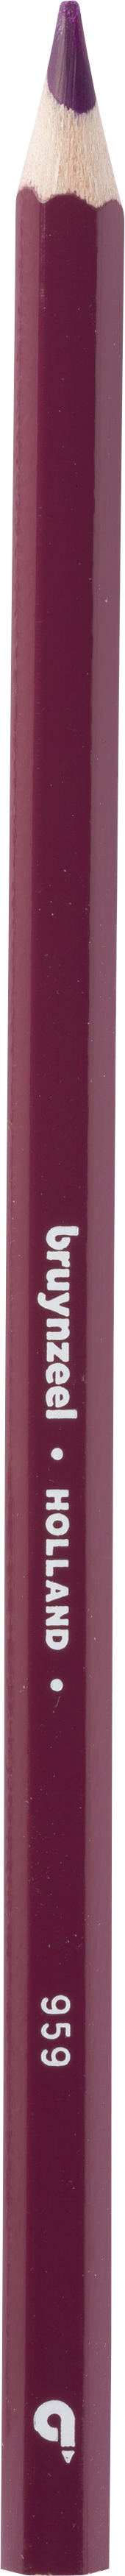 BRUYNZEEL Crayon de couleur Super 3.3mm 60516959 lila lila